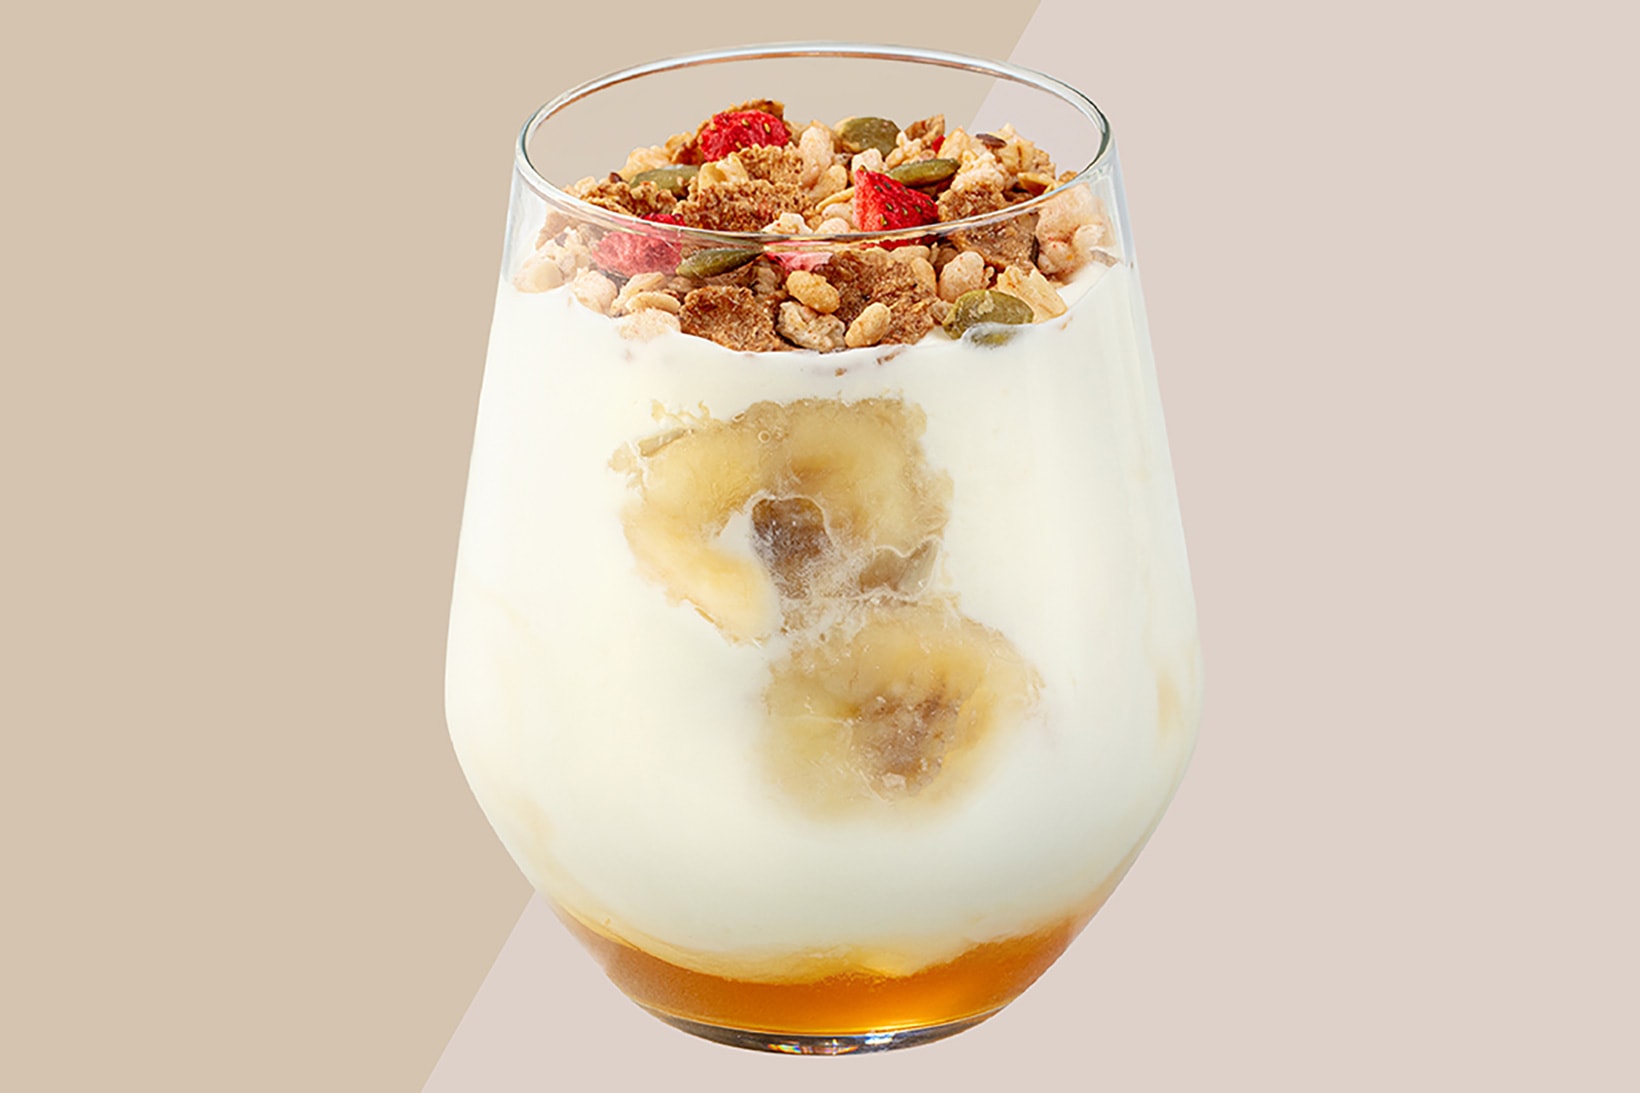 Starbucks Hong Kong Banana Maple Oat-based Yogurt with Granola Mix